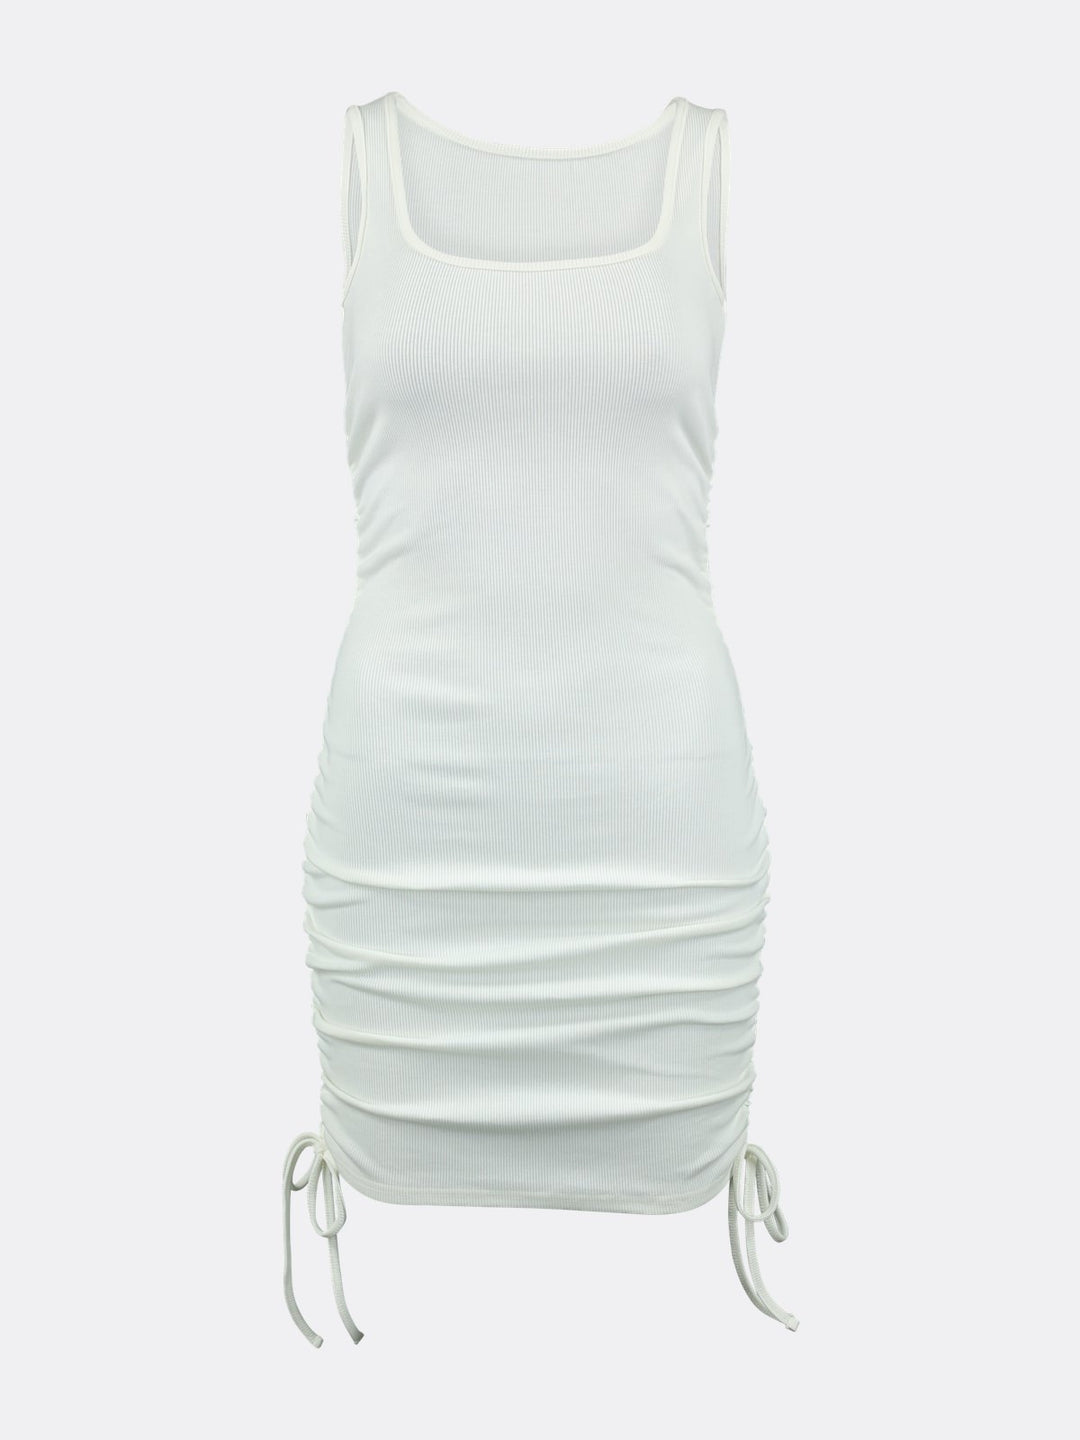 Sleeveless Square Collar Short Dress Featuring Adjustable Draping White Ghost | Jolovies